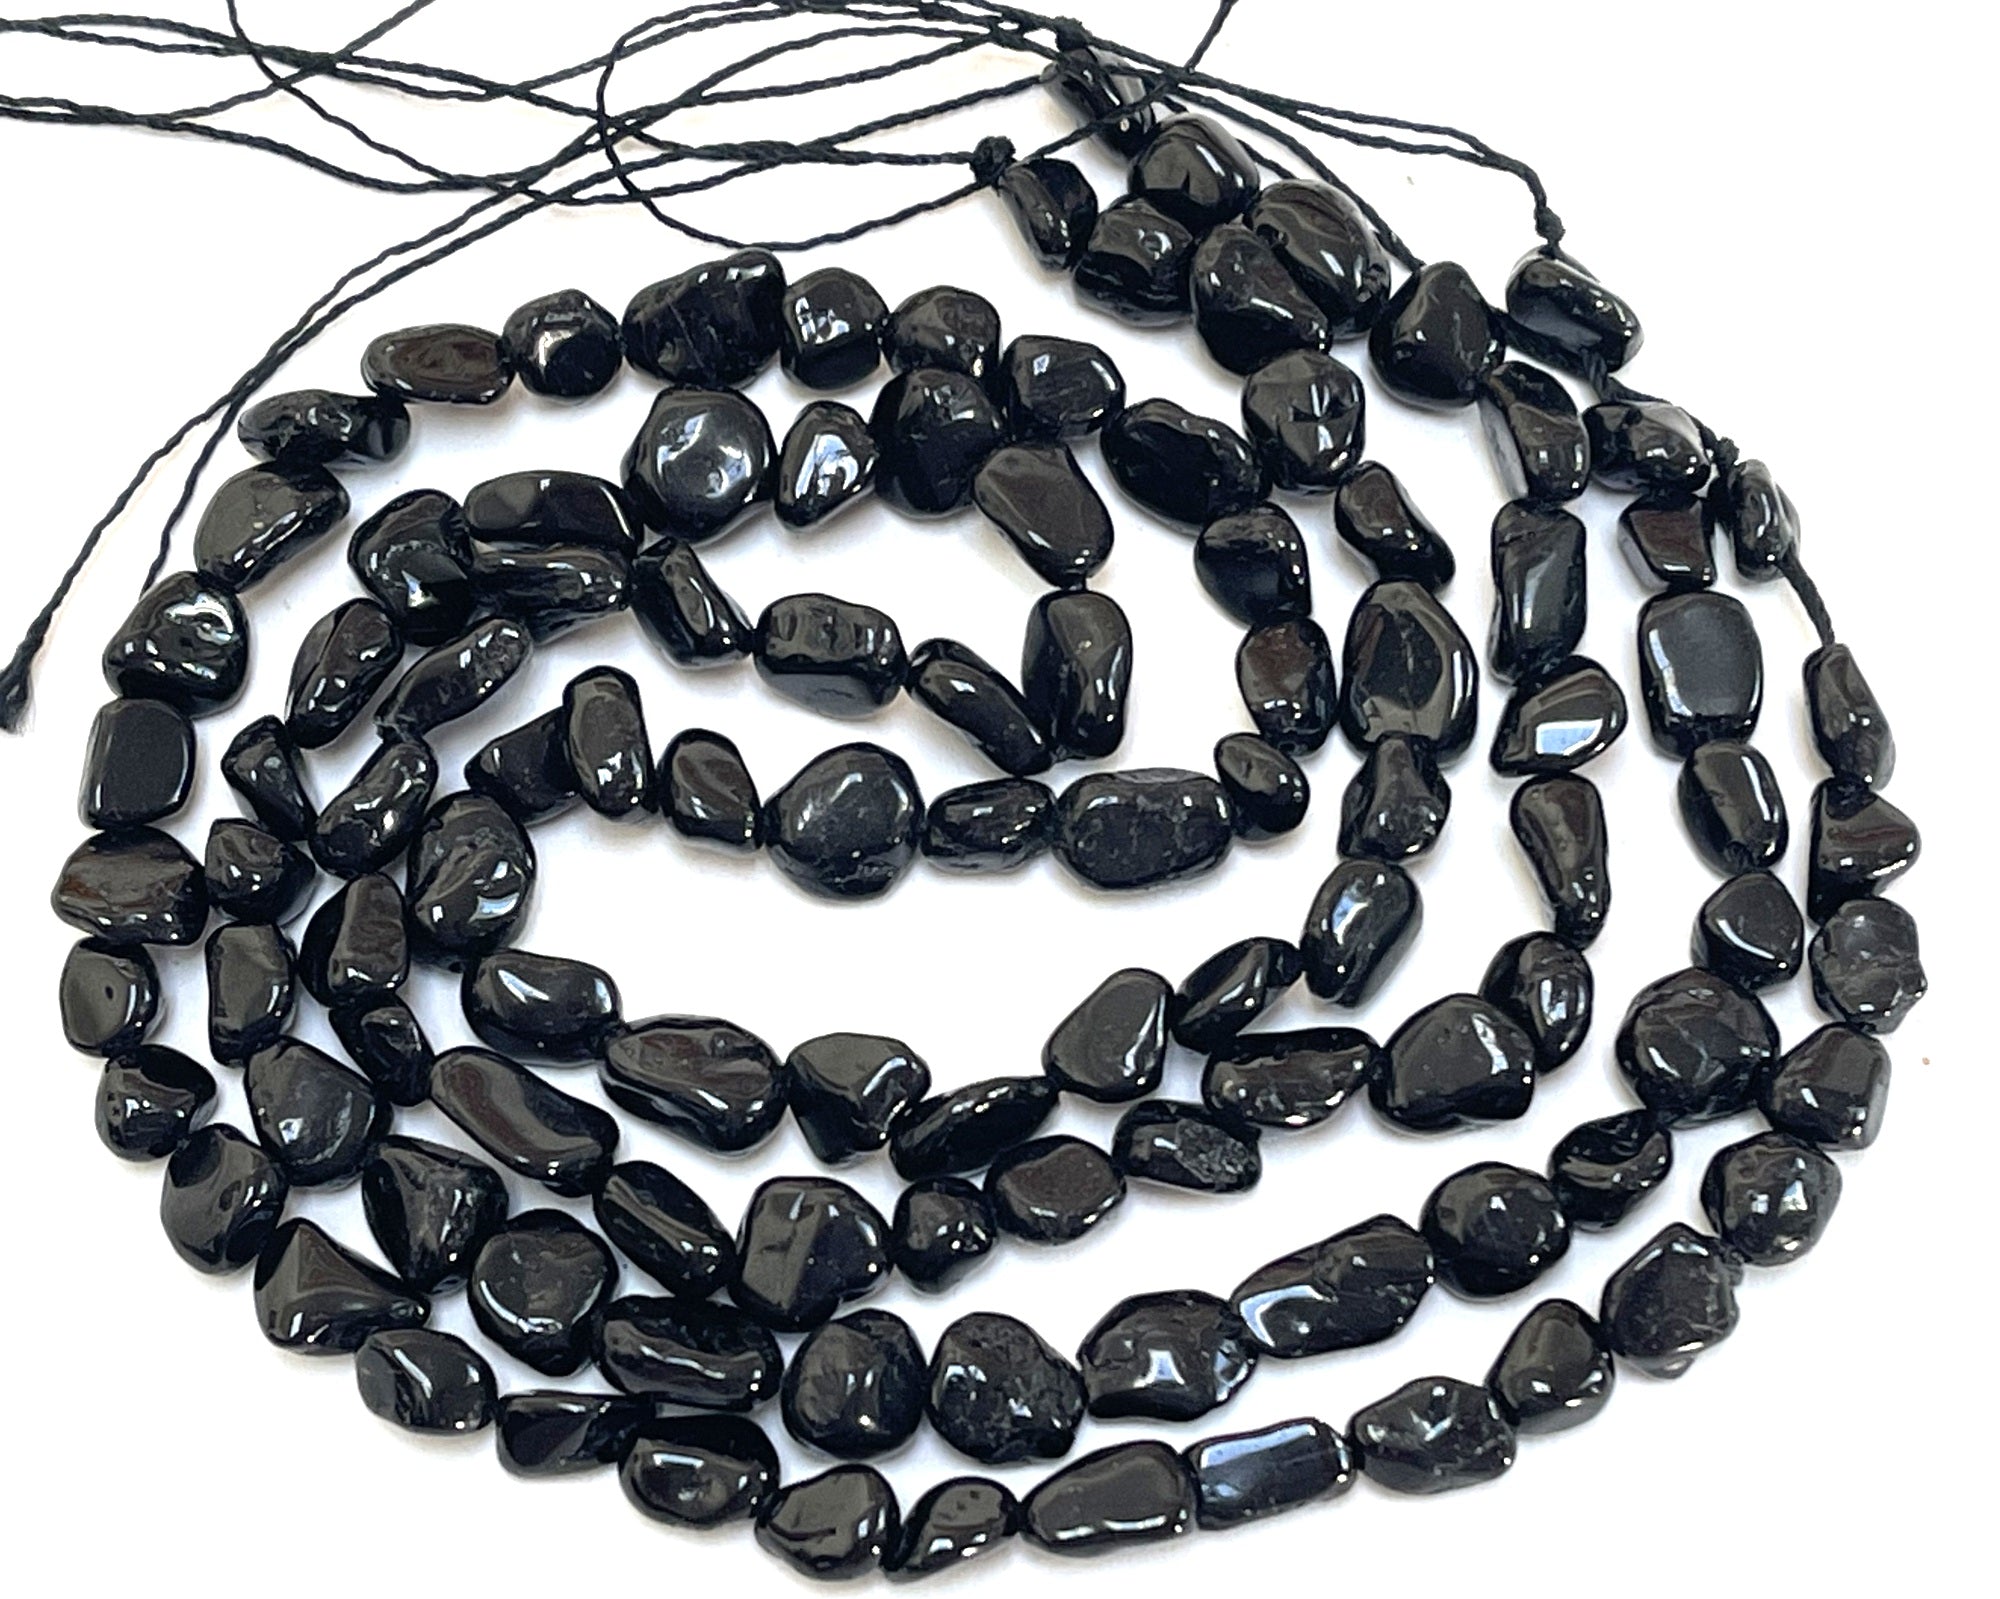 Black Tourmaline 6-8mm nuggets natural gemstone beads 16" strand